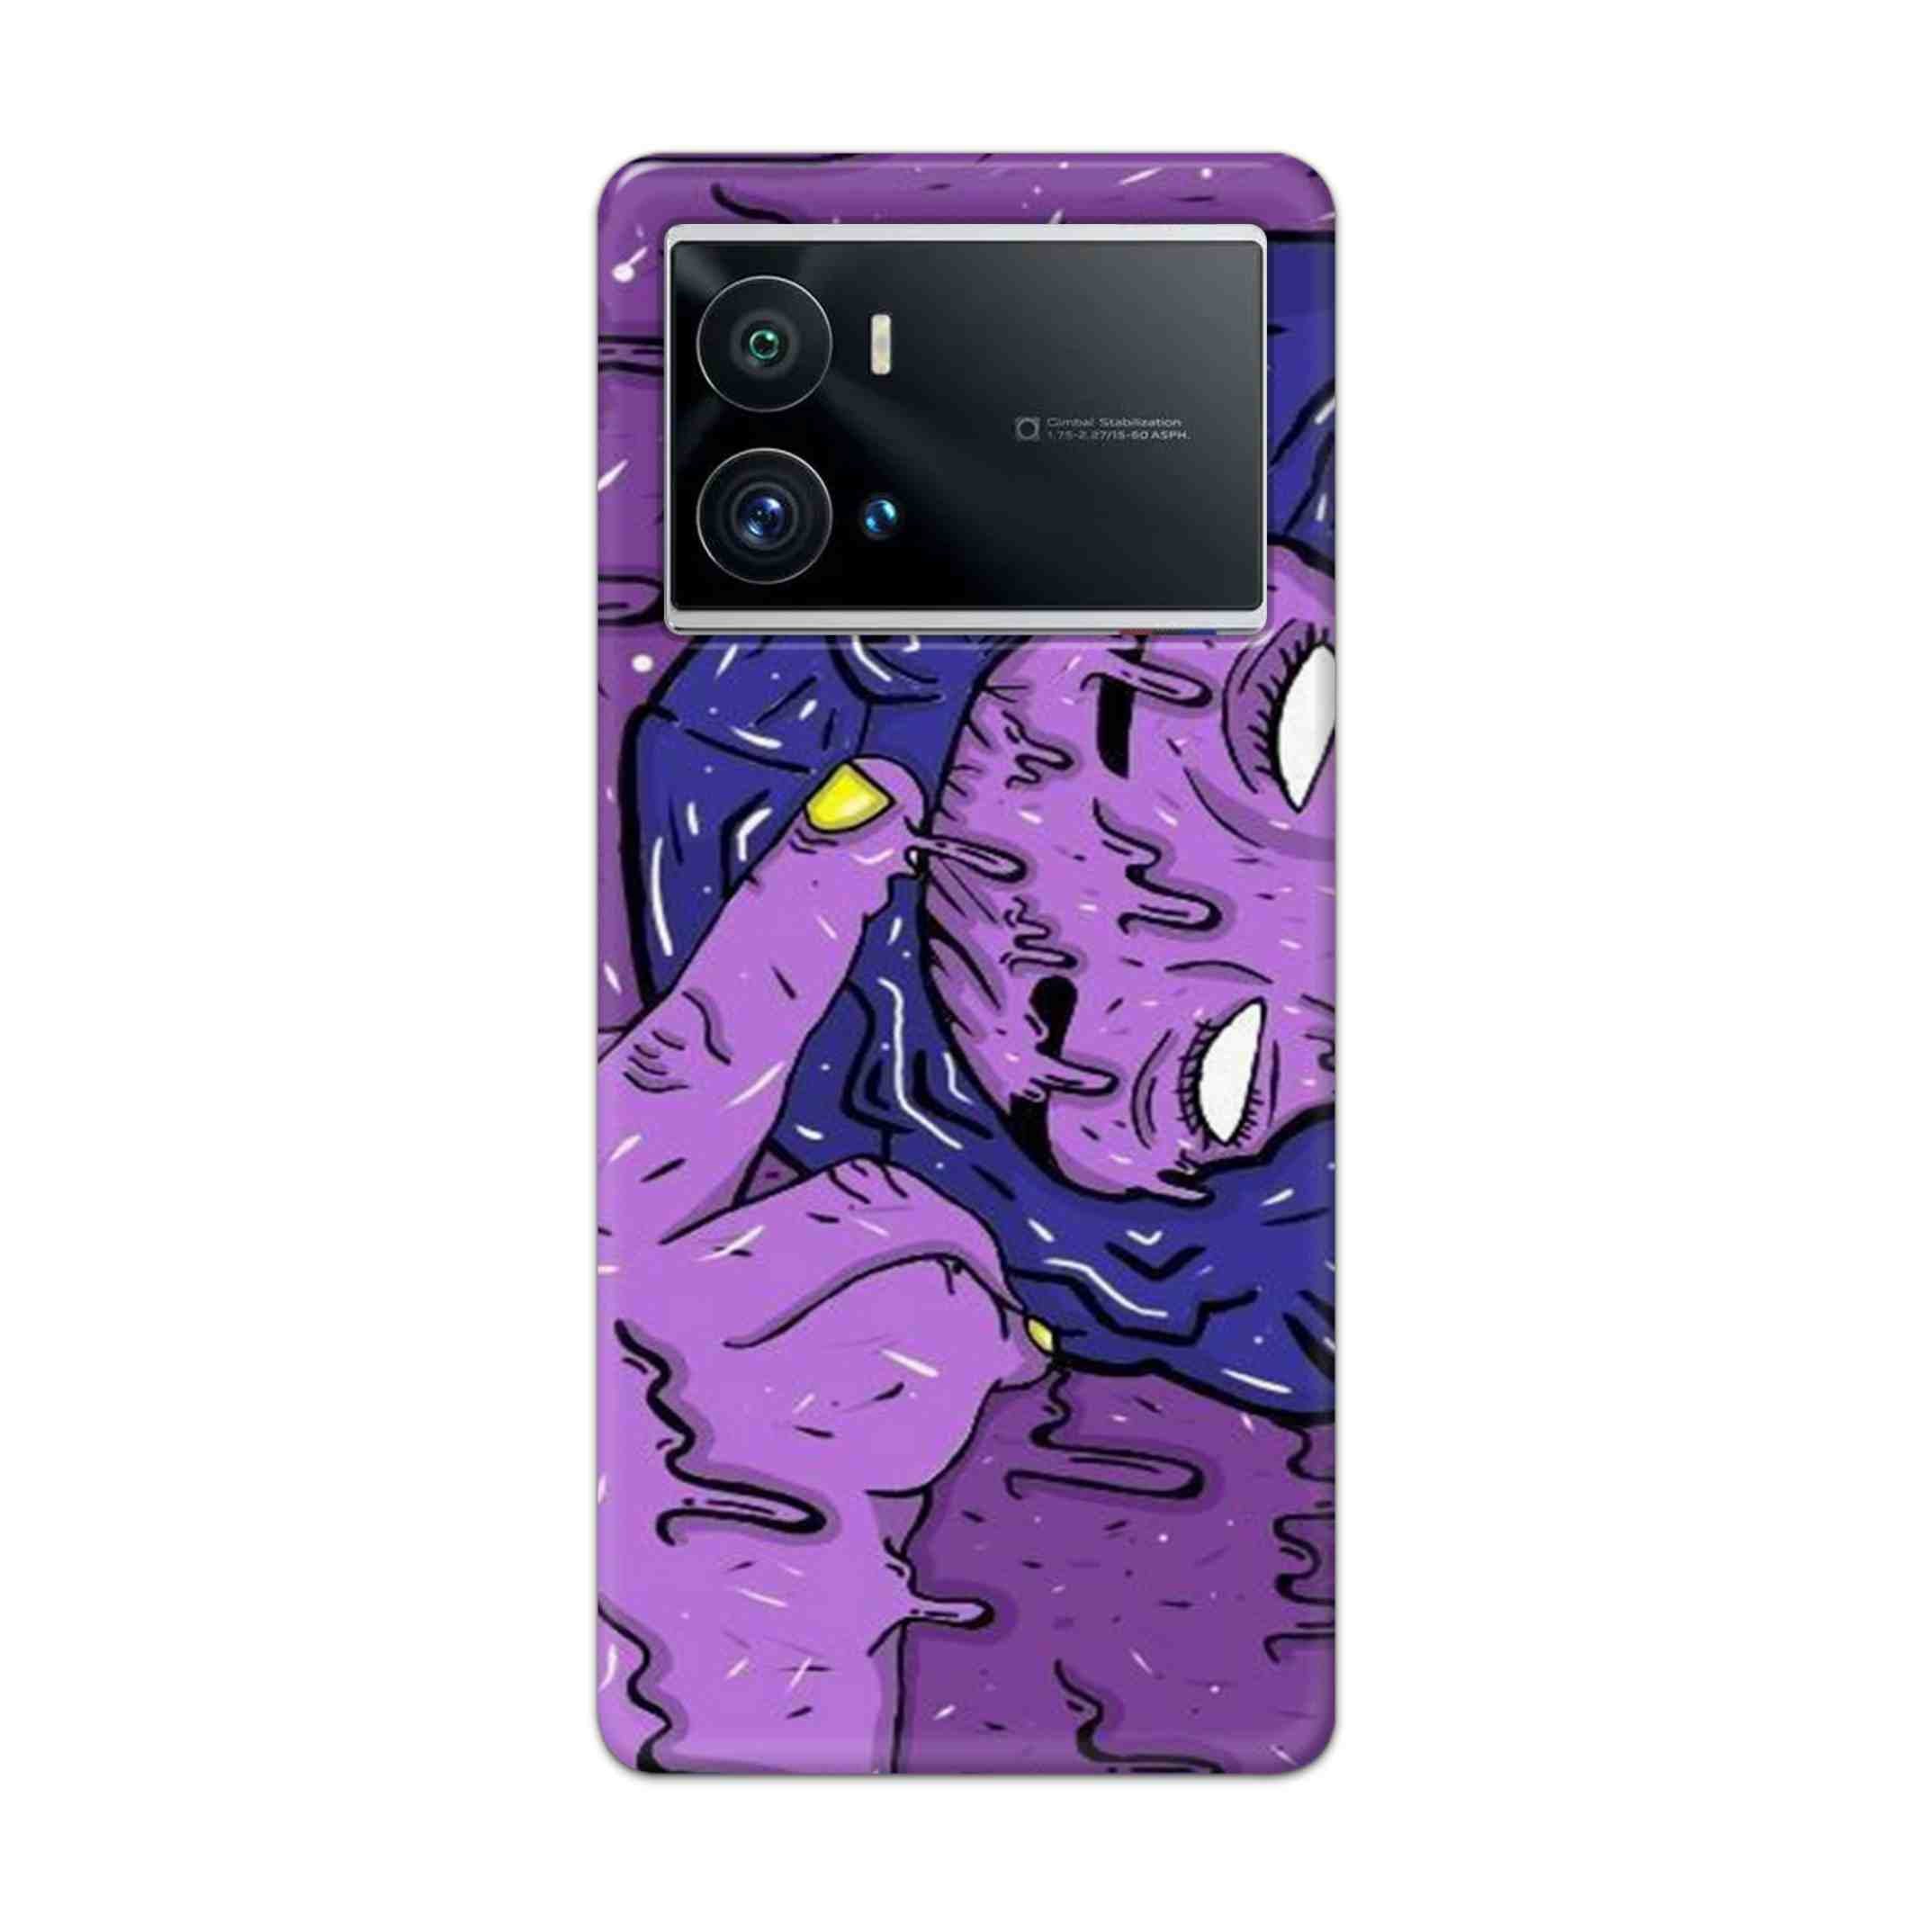 Buy Dashing Art Hard Back Mobile Phone Case Cover For iQOO 9 Pro 5G Online